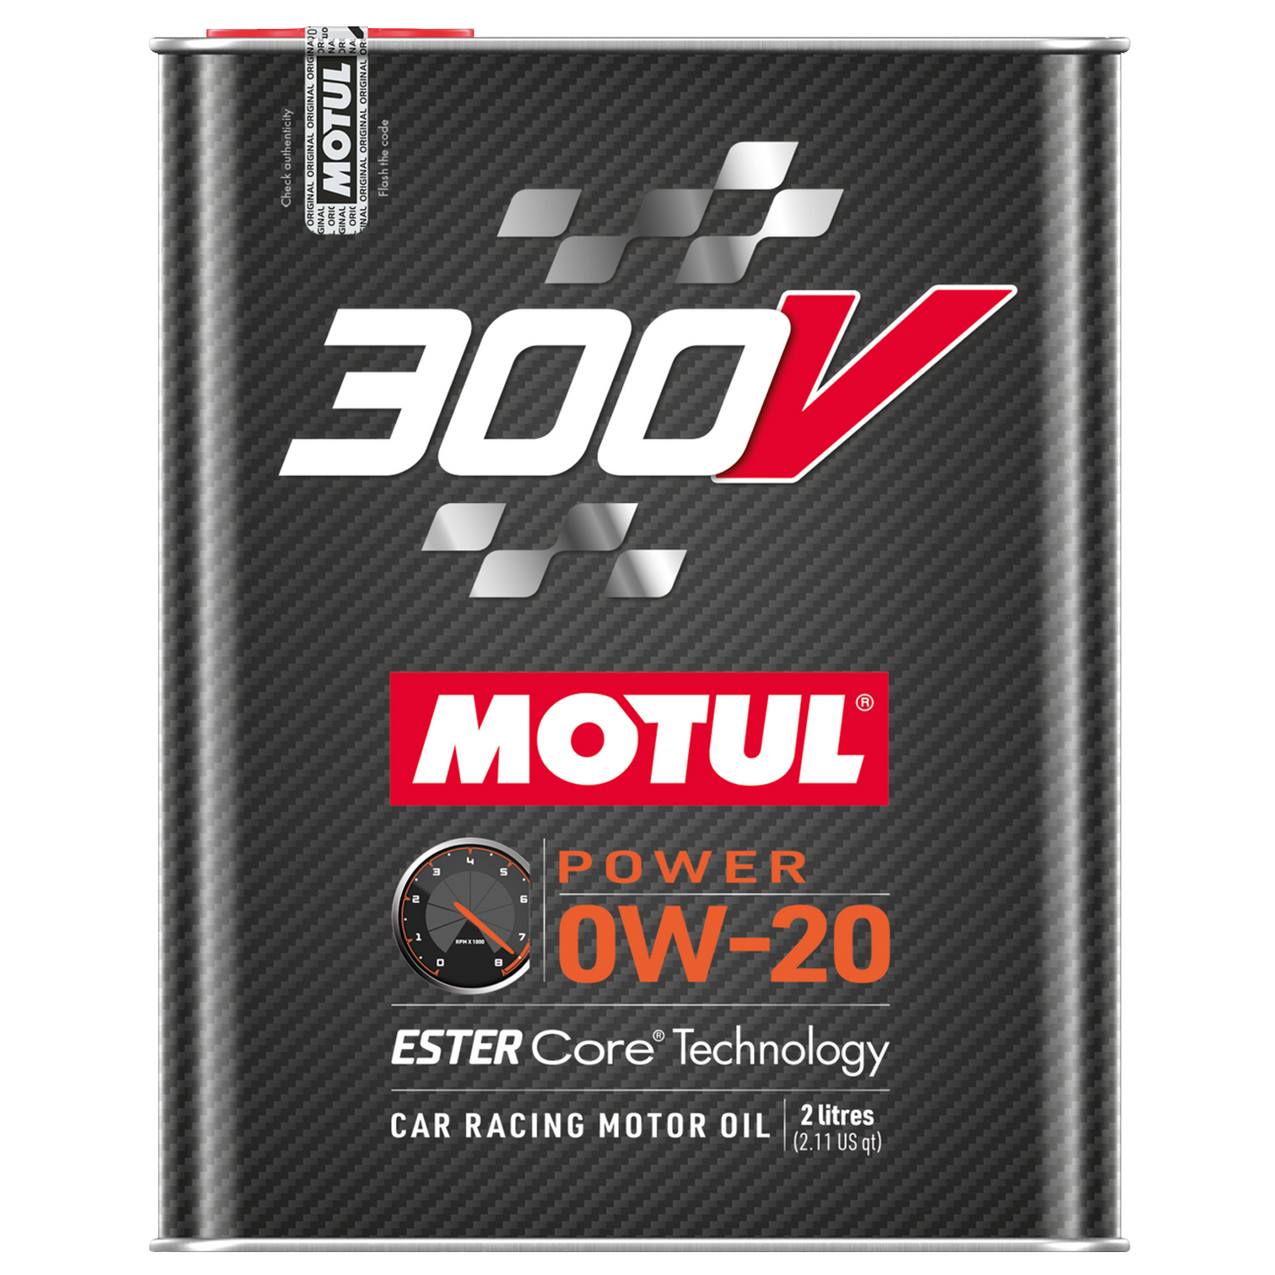 MOTUL - 300V Power 100% Synthetic Engine Oil